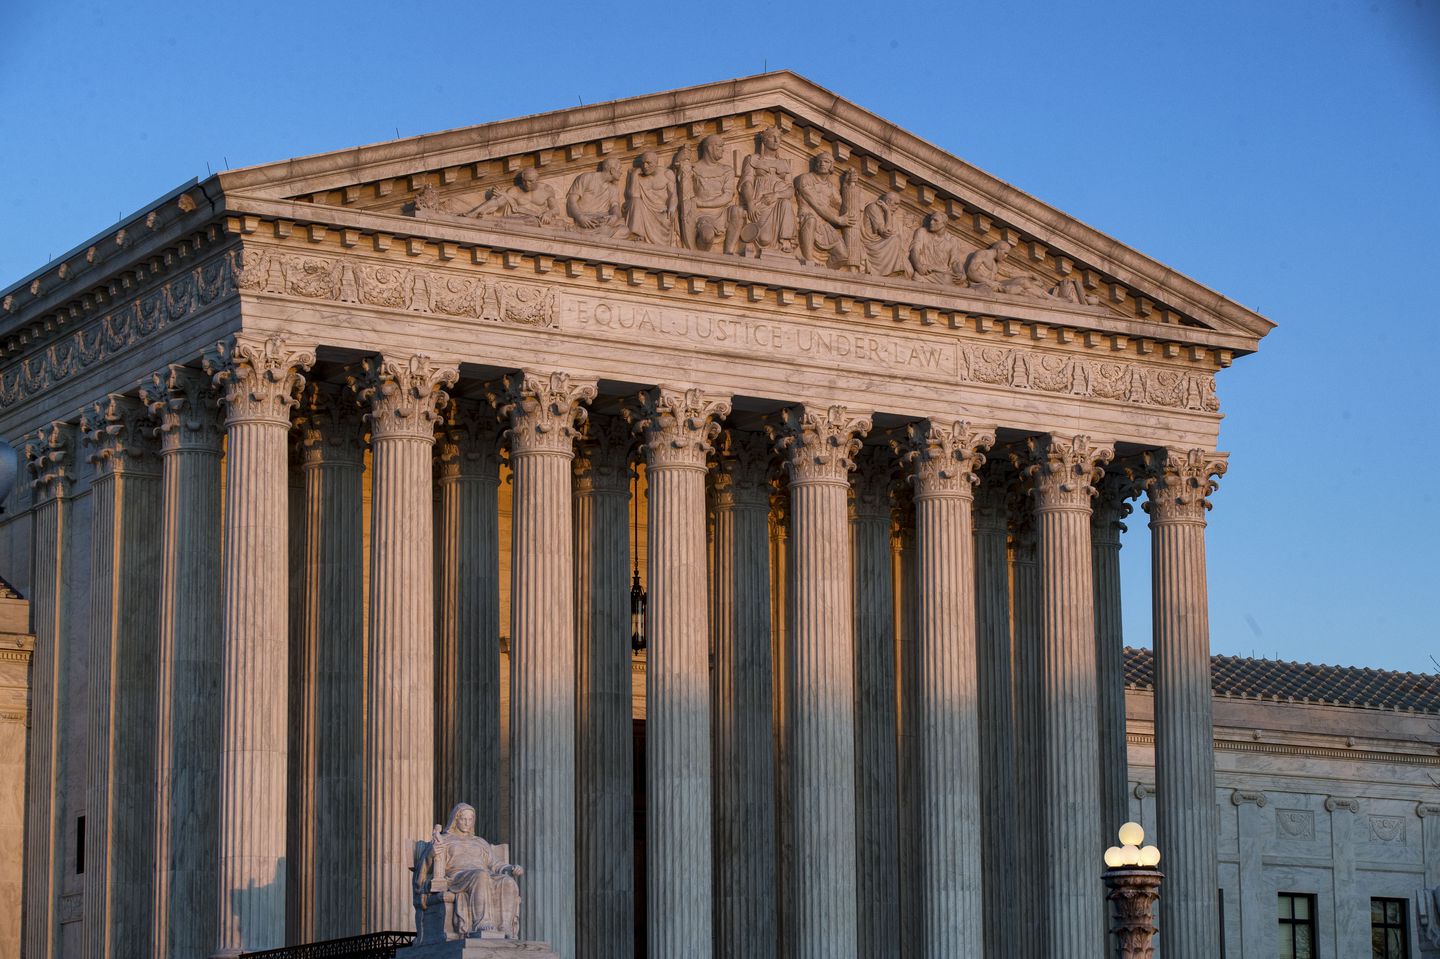 The US Supreme Court in Washington.